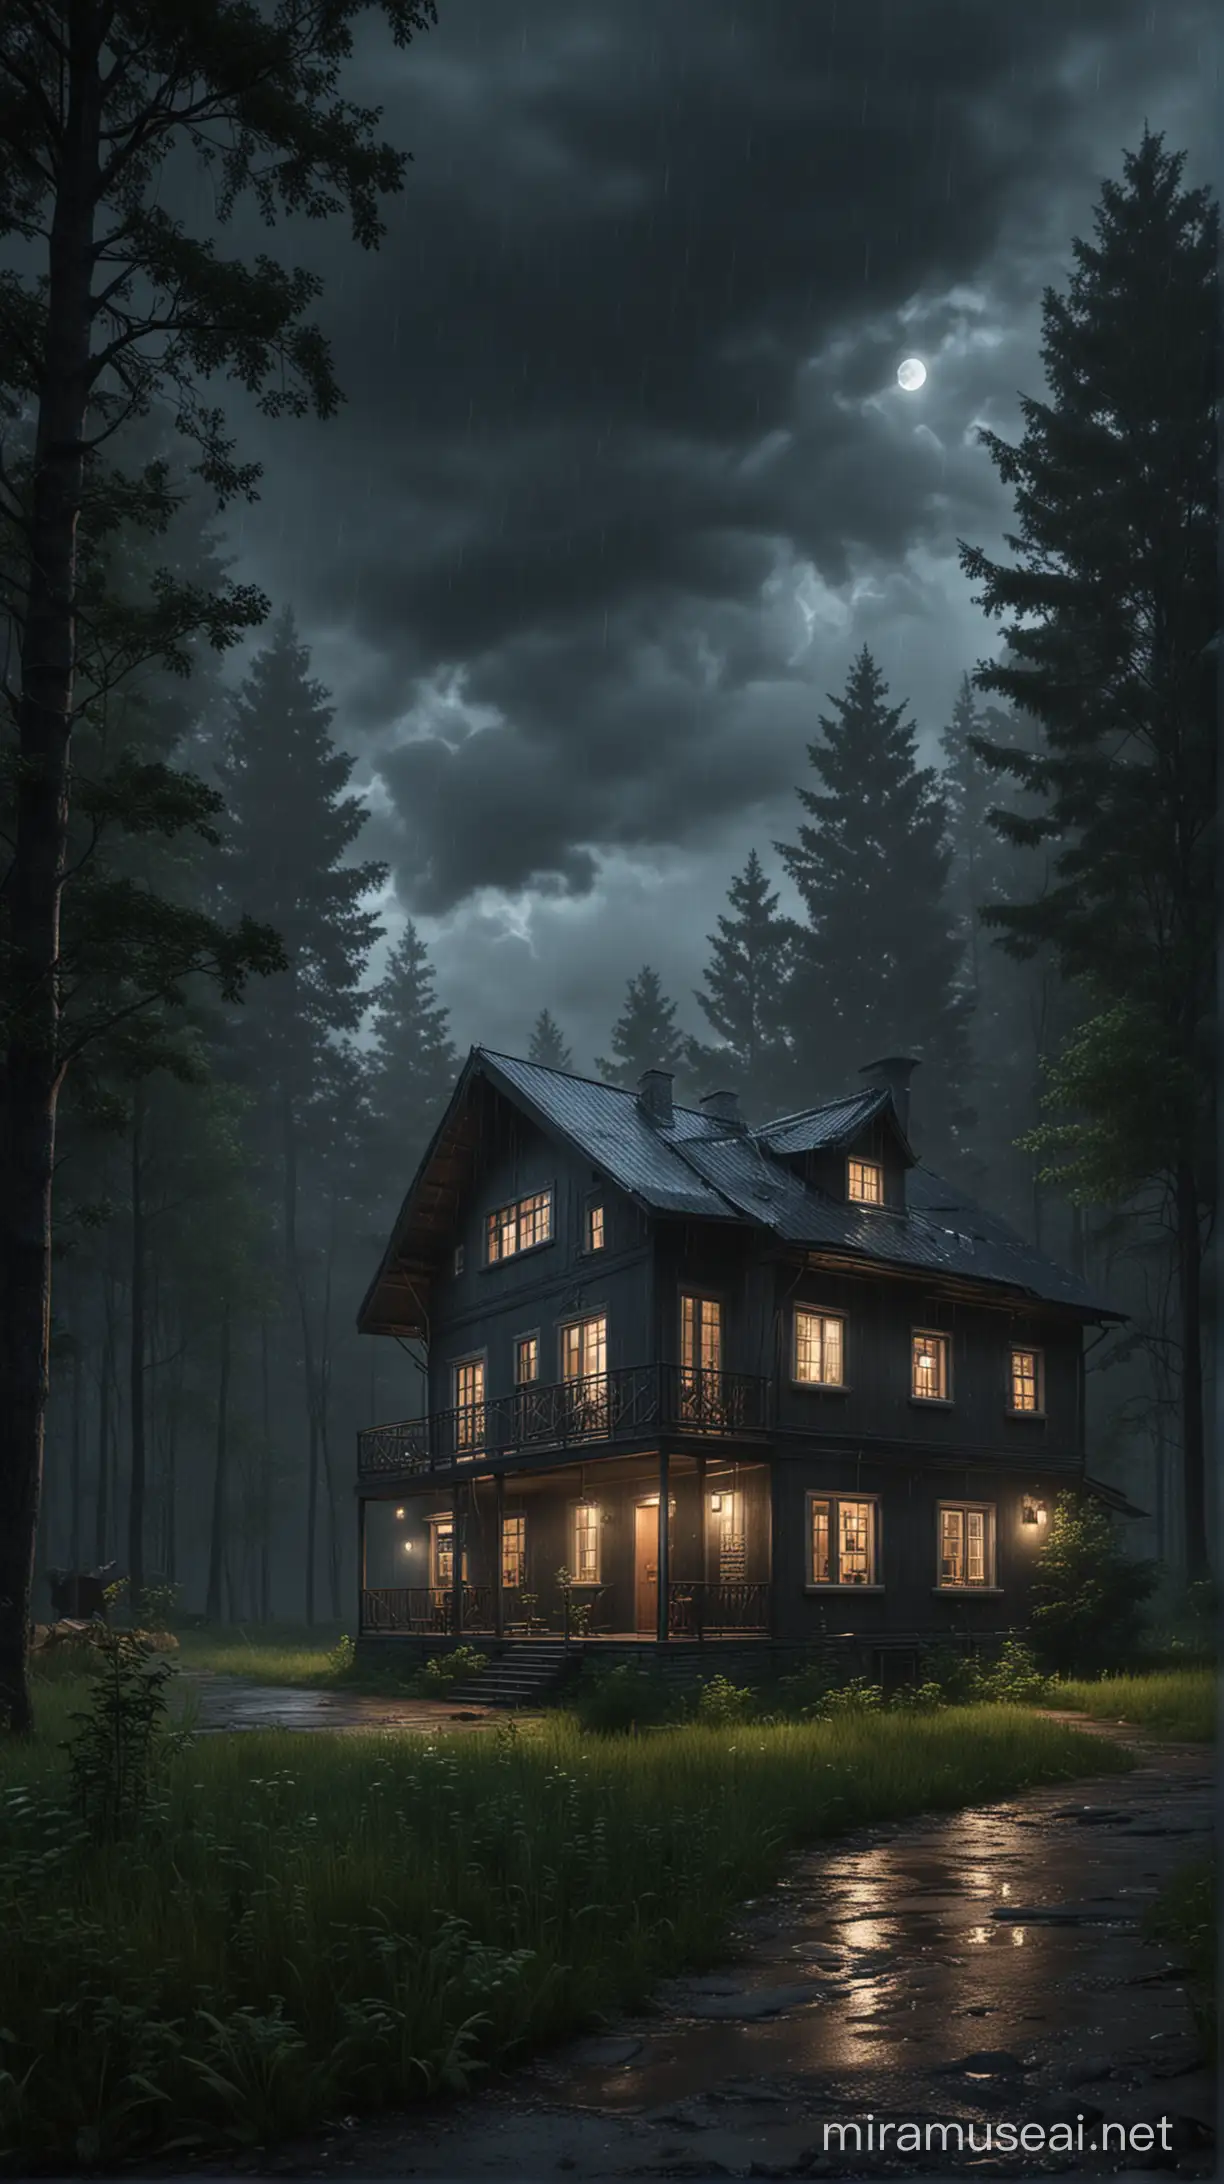 Enchanted Forest House on Rainy Night